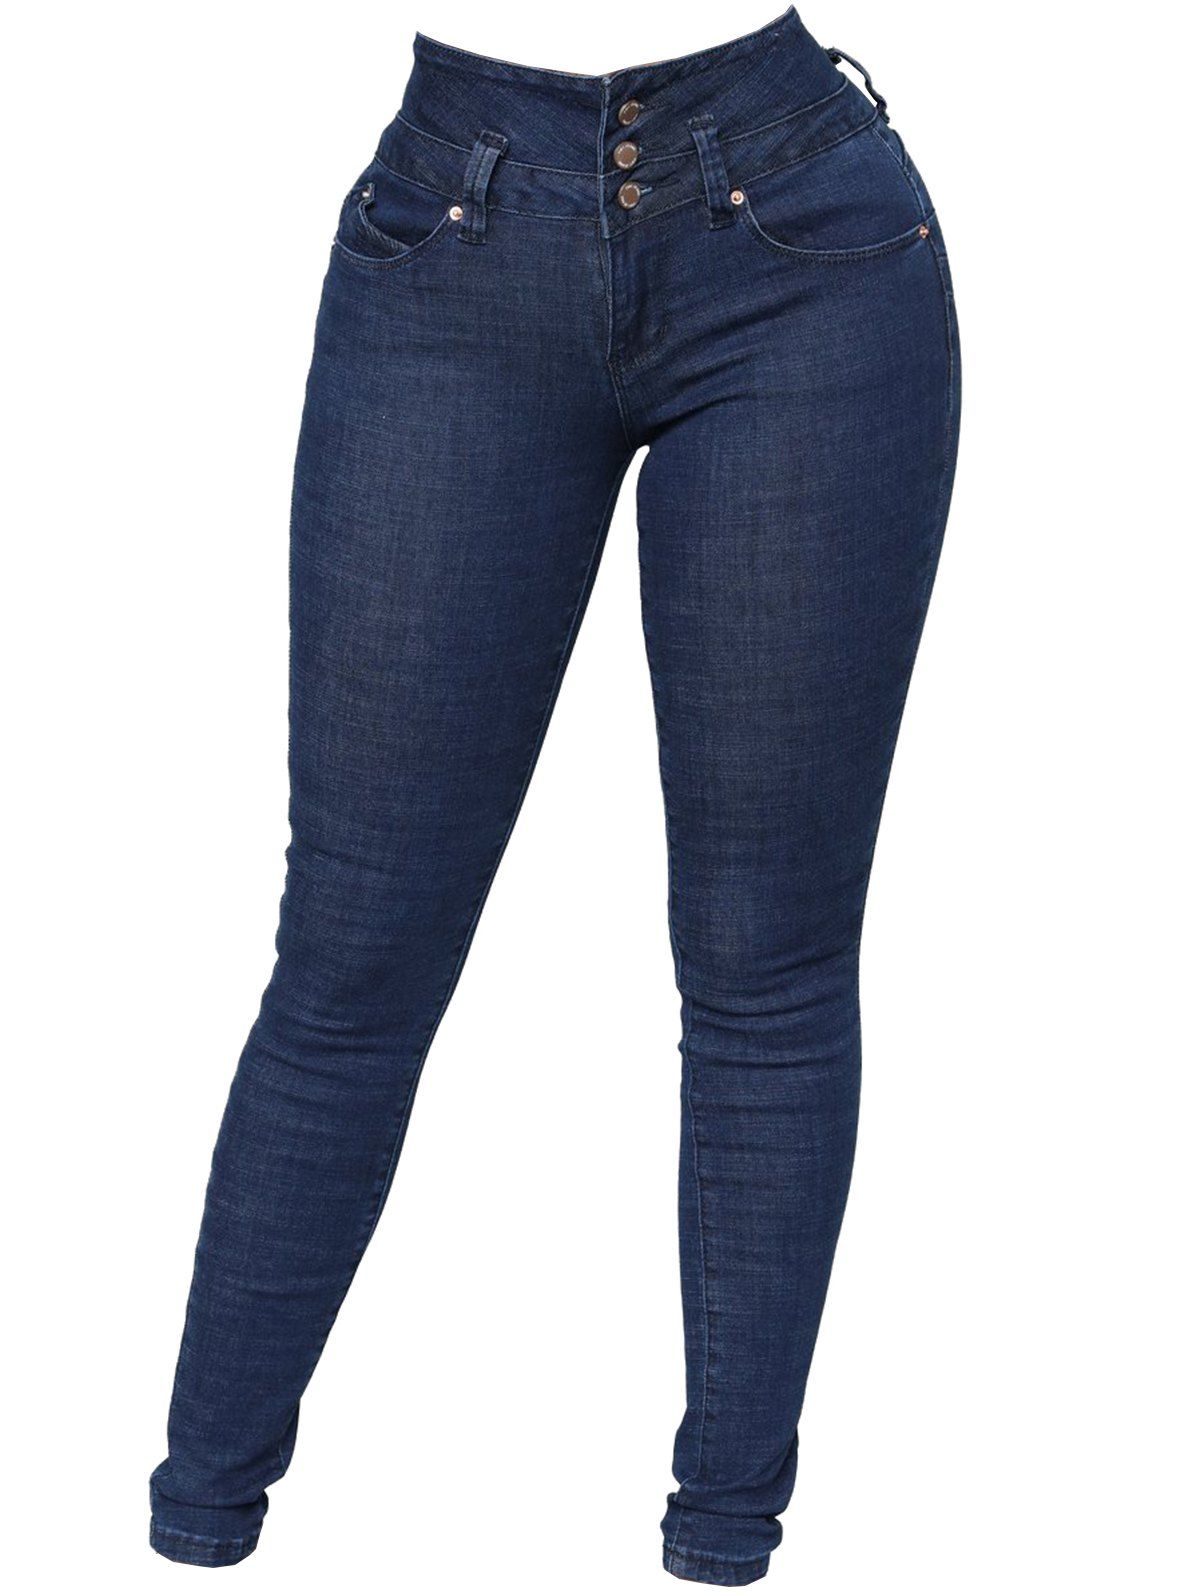 [49% OFF] Women Amazing Butt Lift Mid-Rise Stretch Denim Skinny Jeans ...